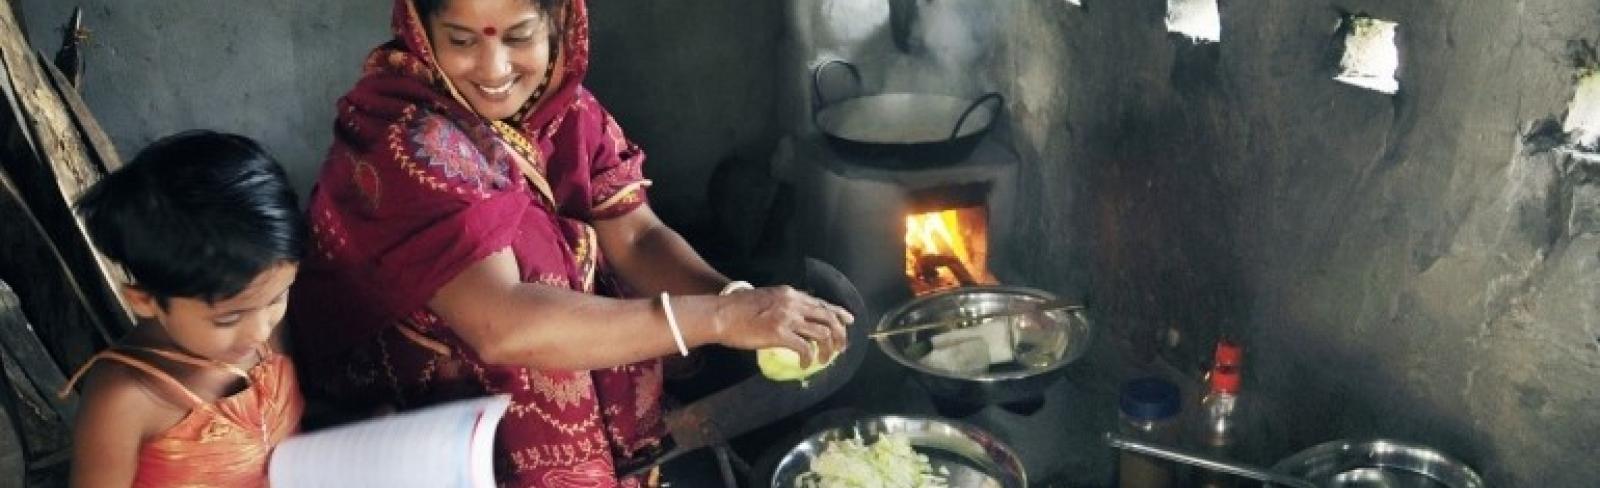 Bangladesh: Healthier Homes through Improved Cookstoves